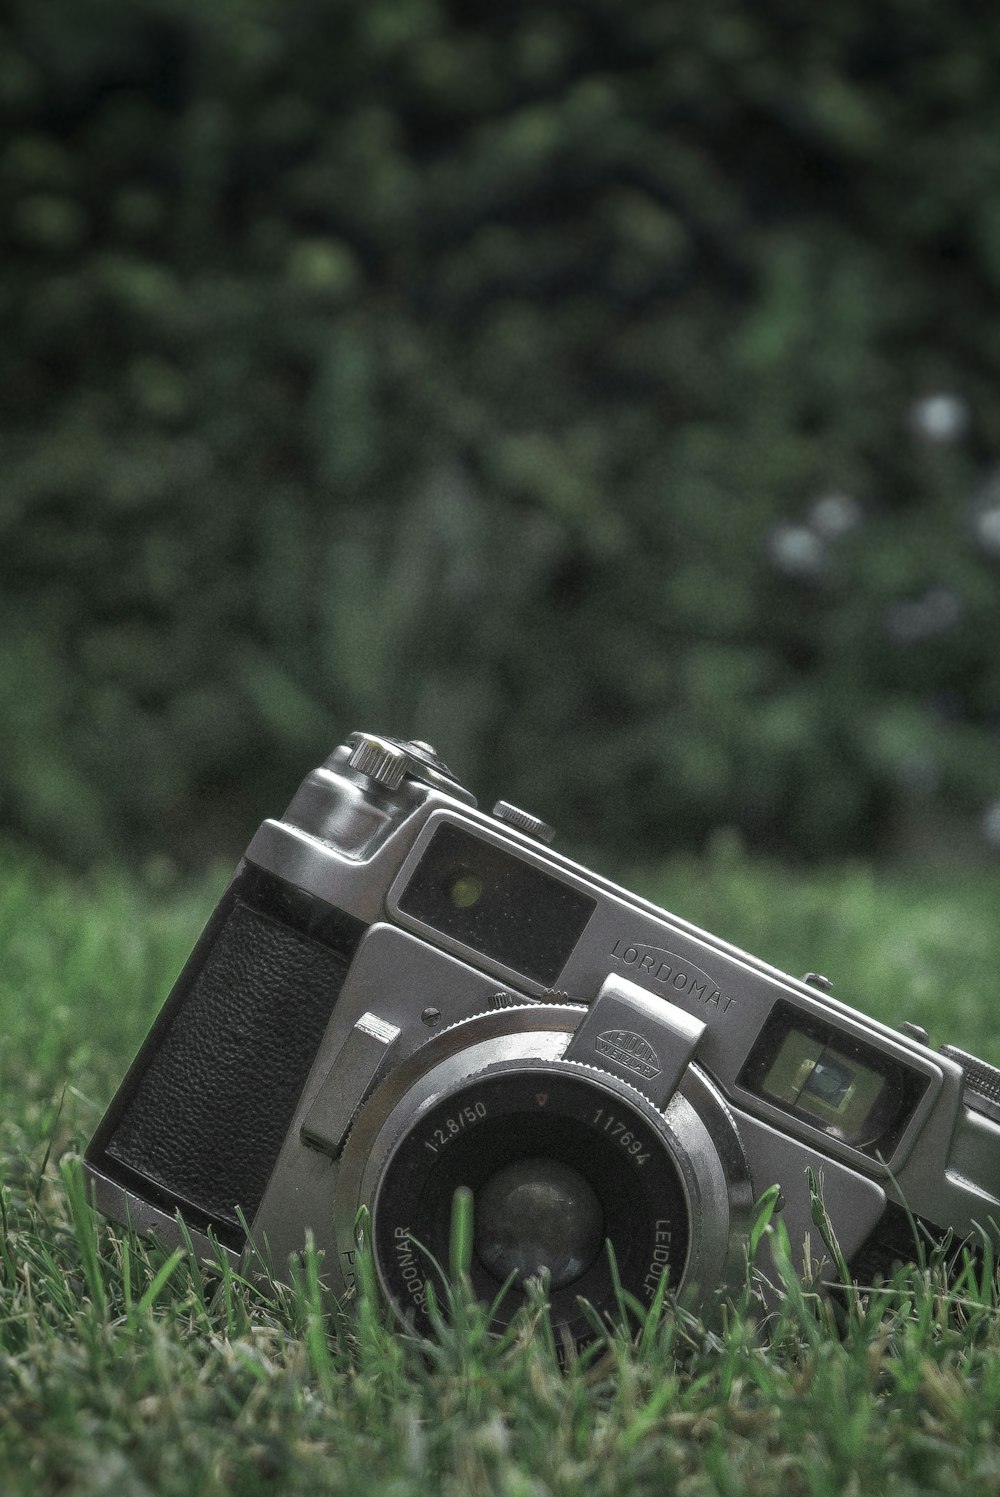 Schwarz-Silber-Kamera auf grünem Gras tagsüber